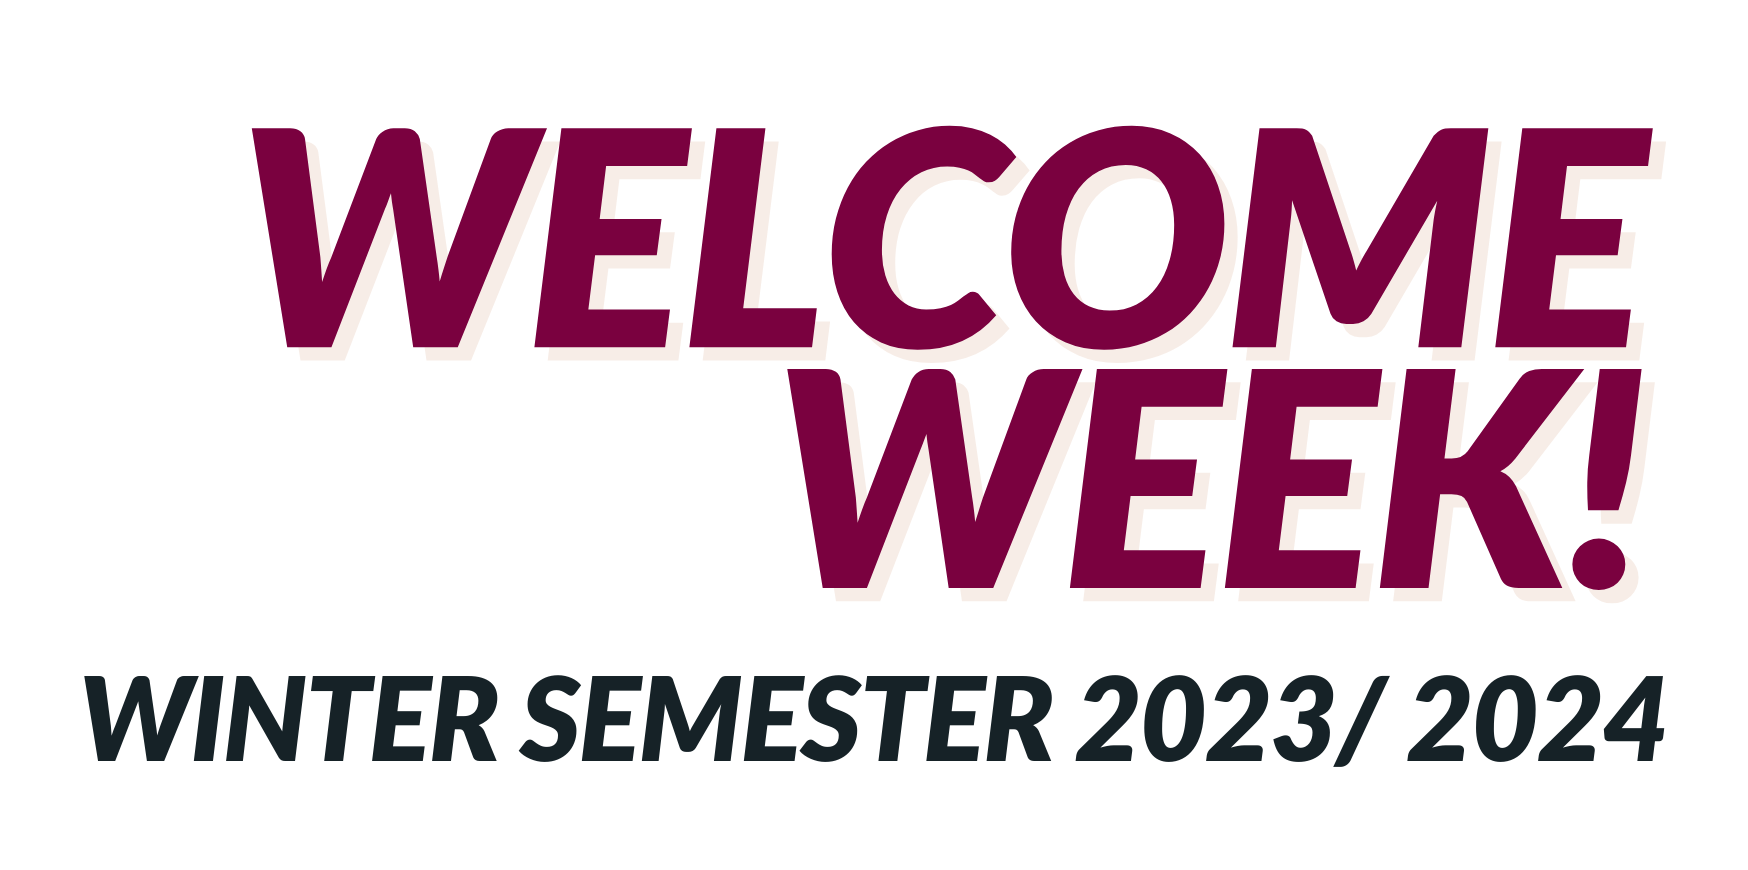 Welcome week 2023/2024